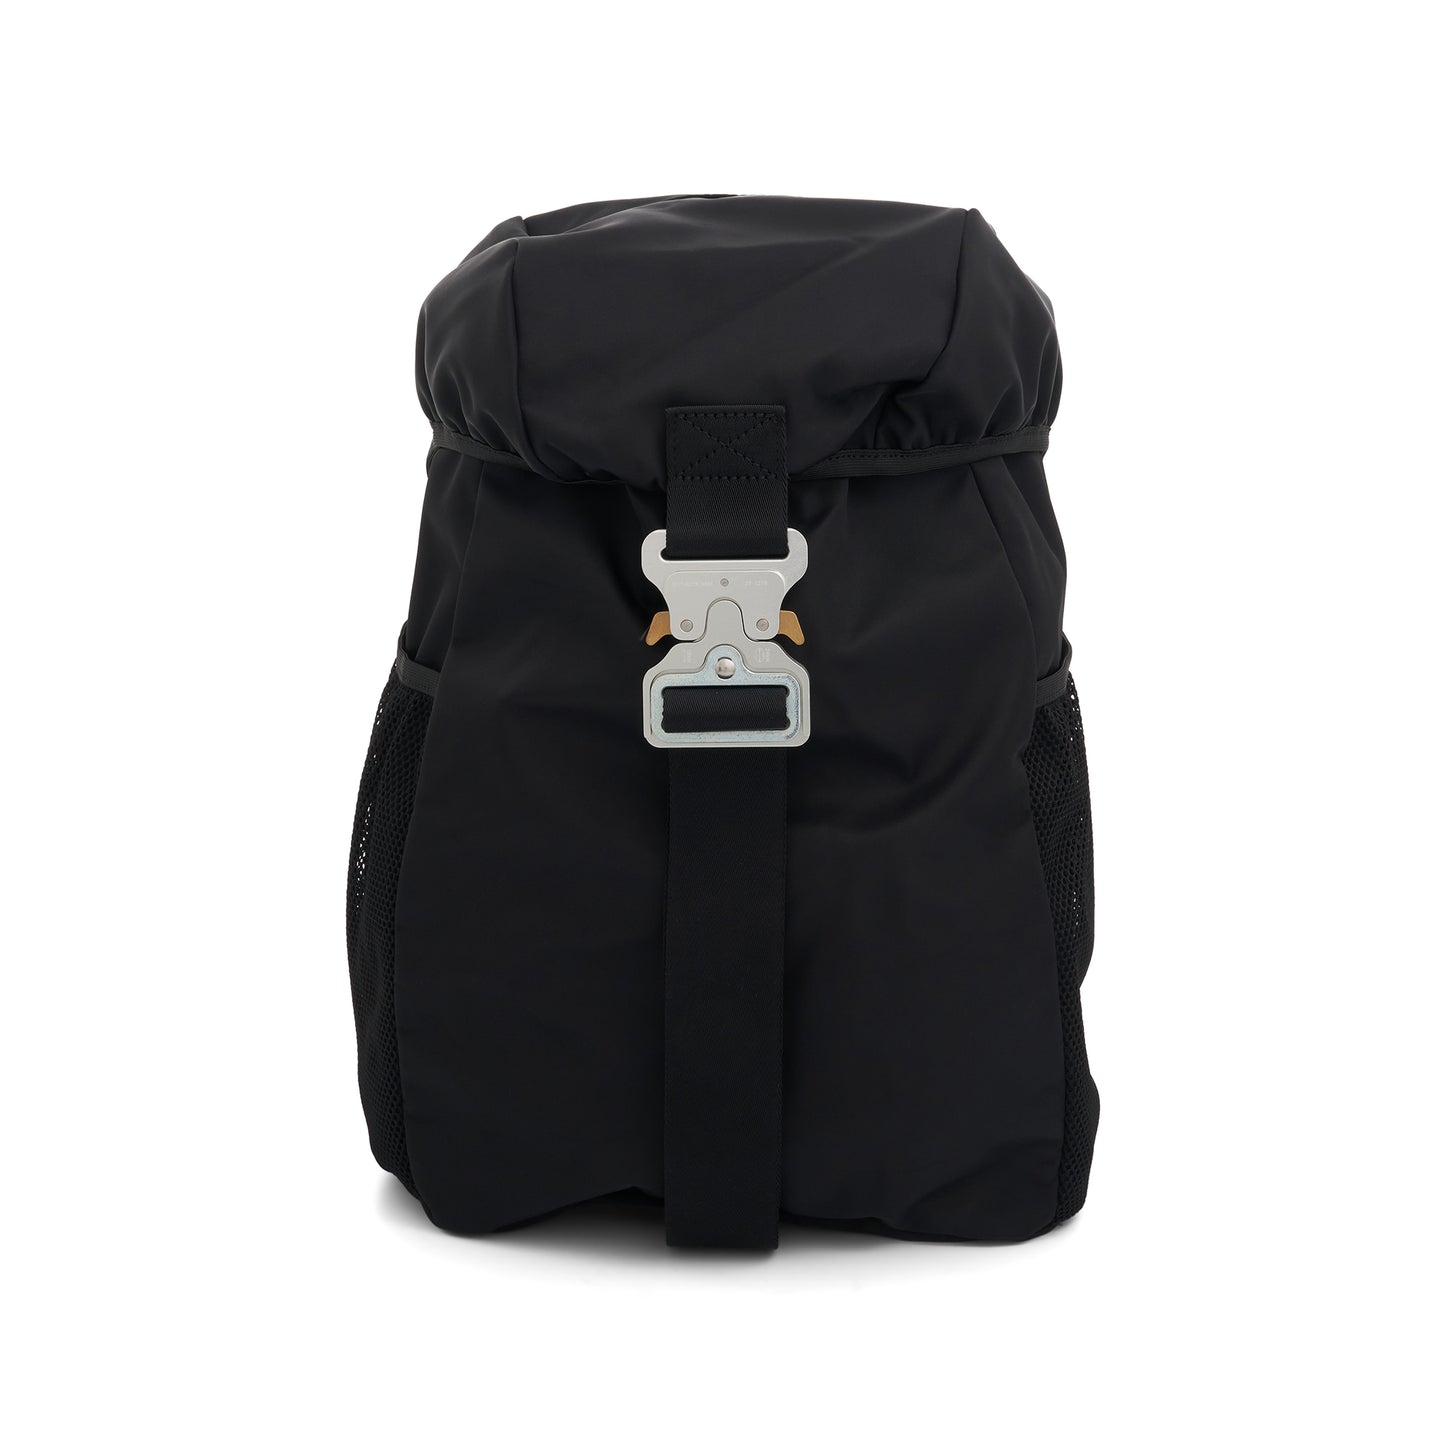 Buckle Camp Backpack in Black